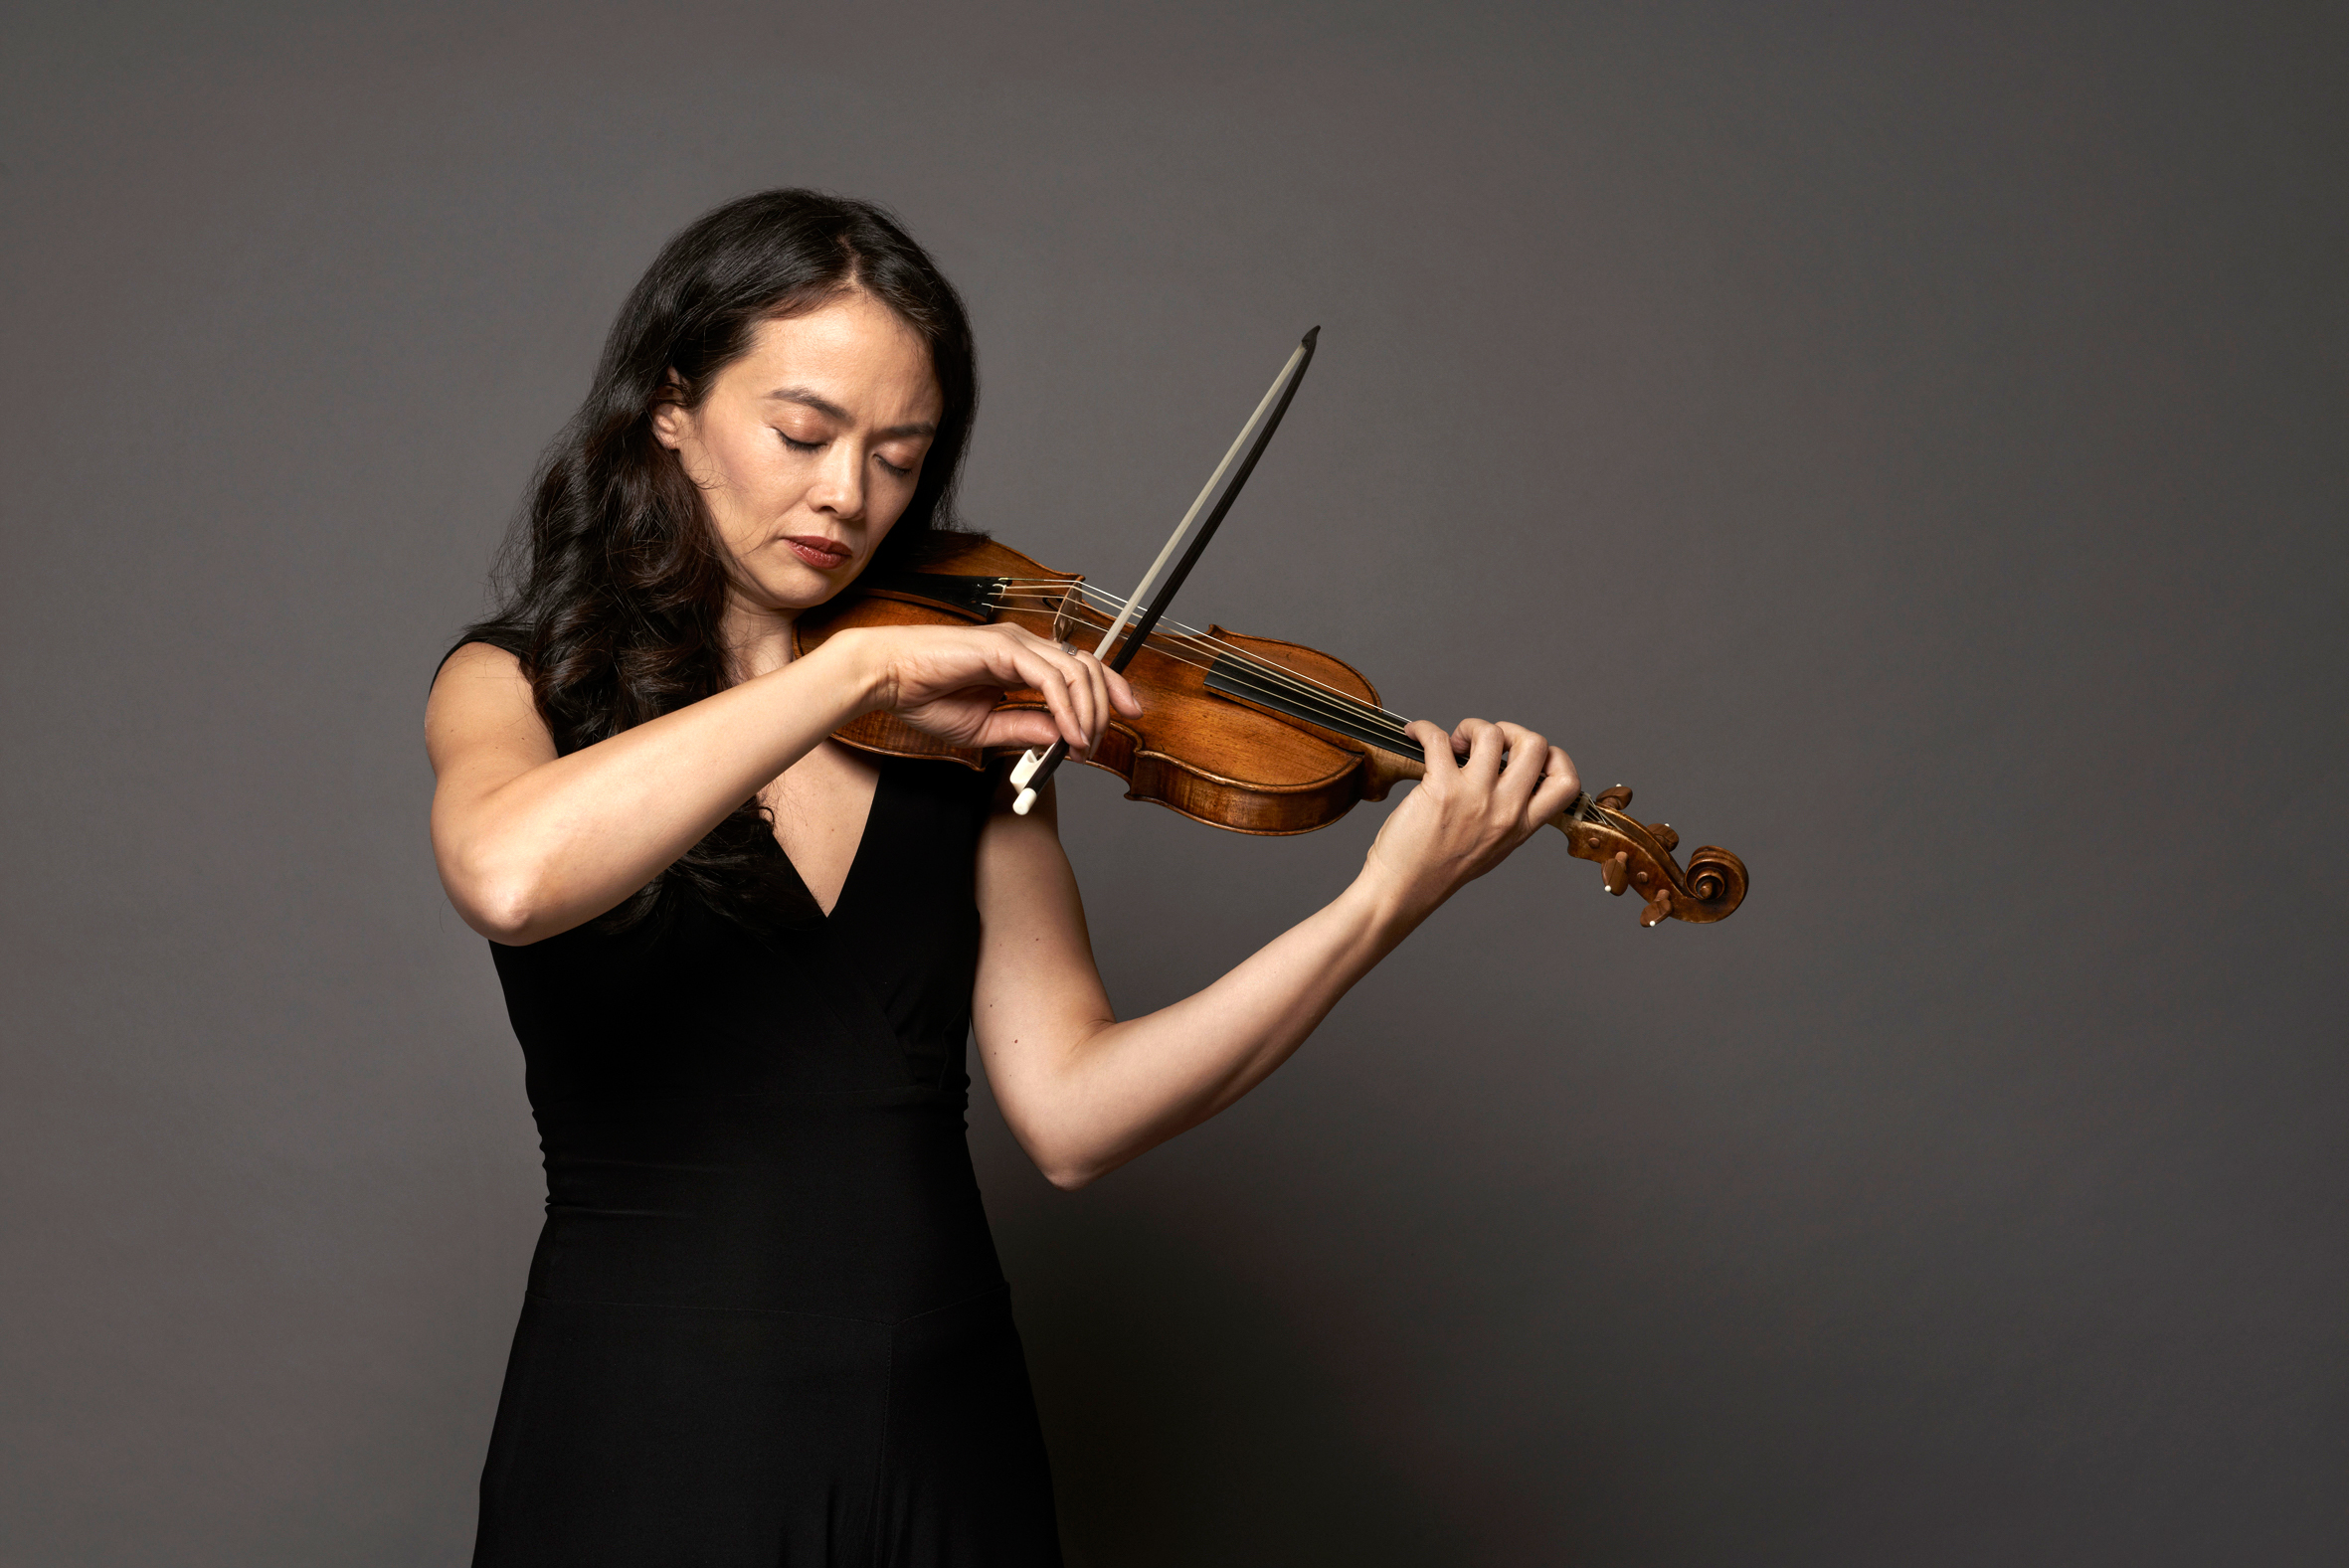 Midori (violinist) - Wikipedia